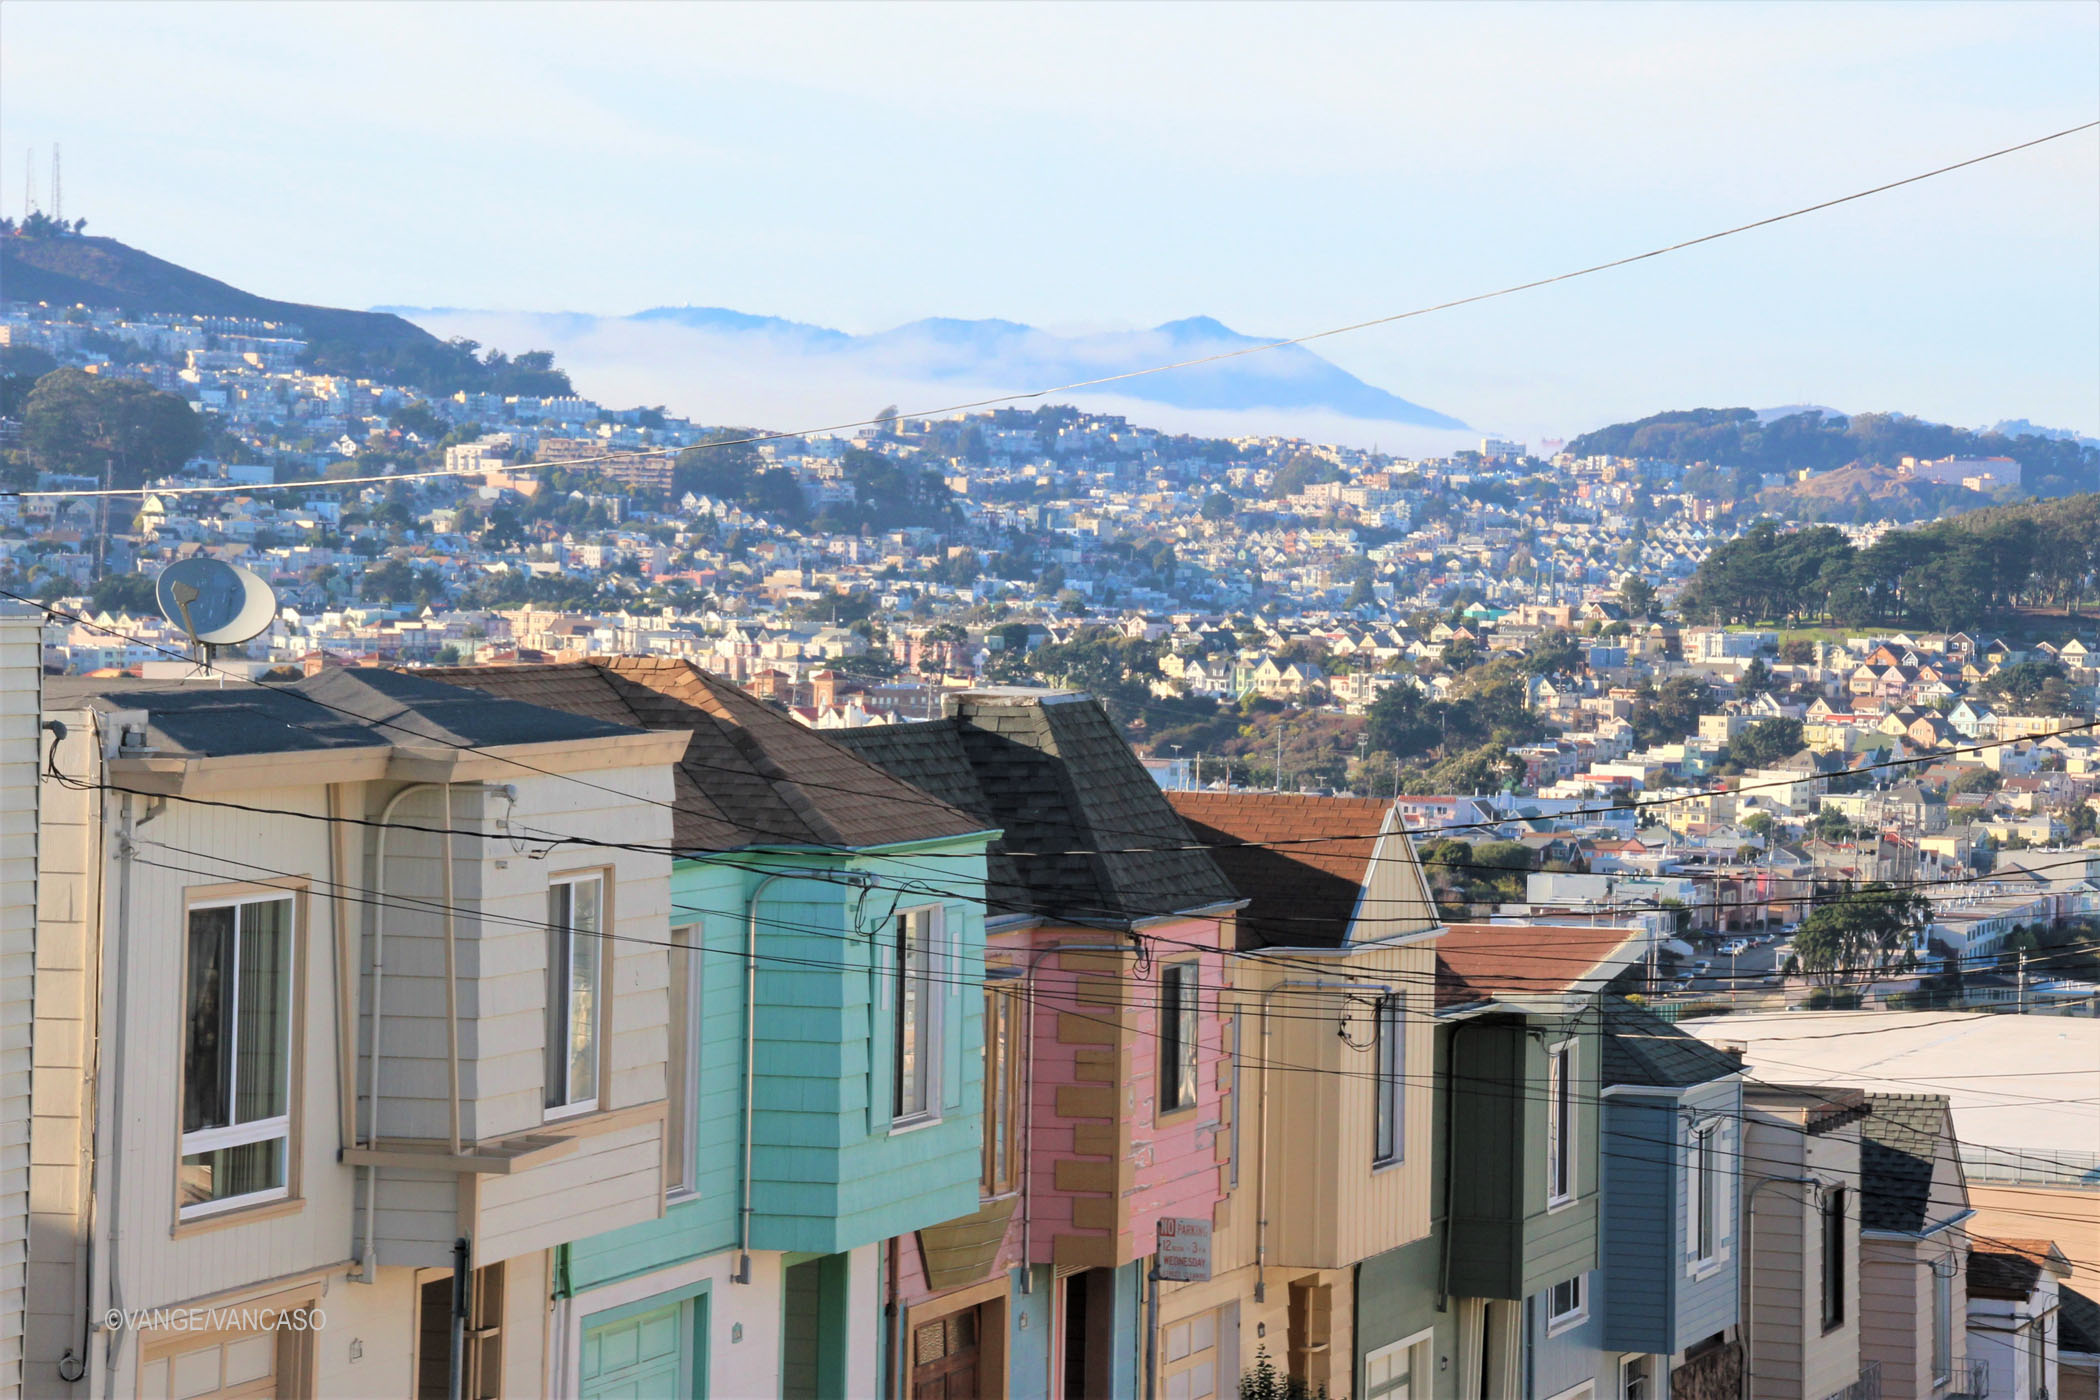 Portola Neighborhood in San Francisco, CA, USA